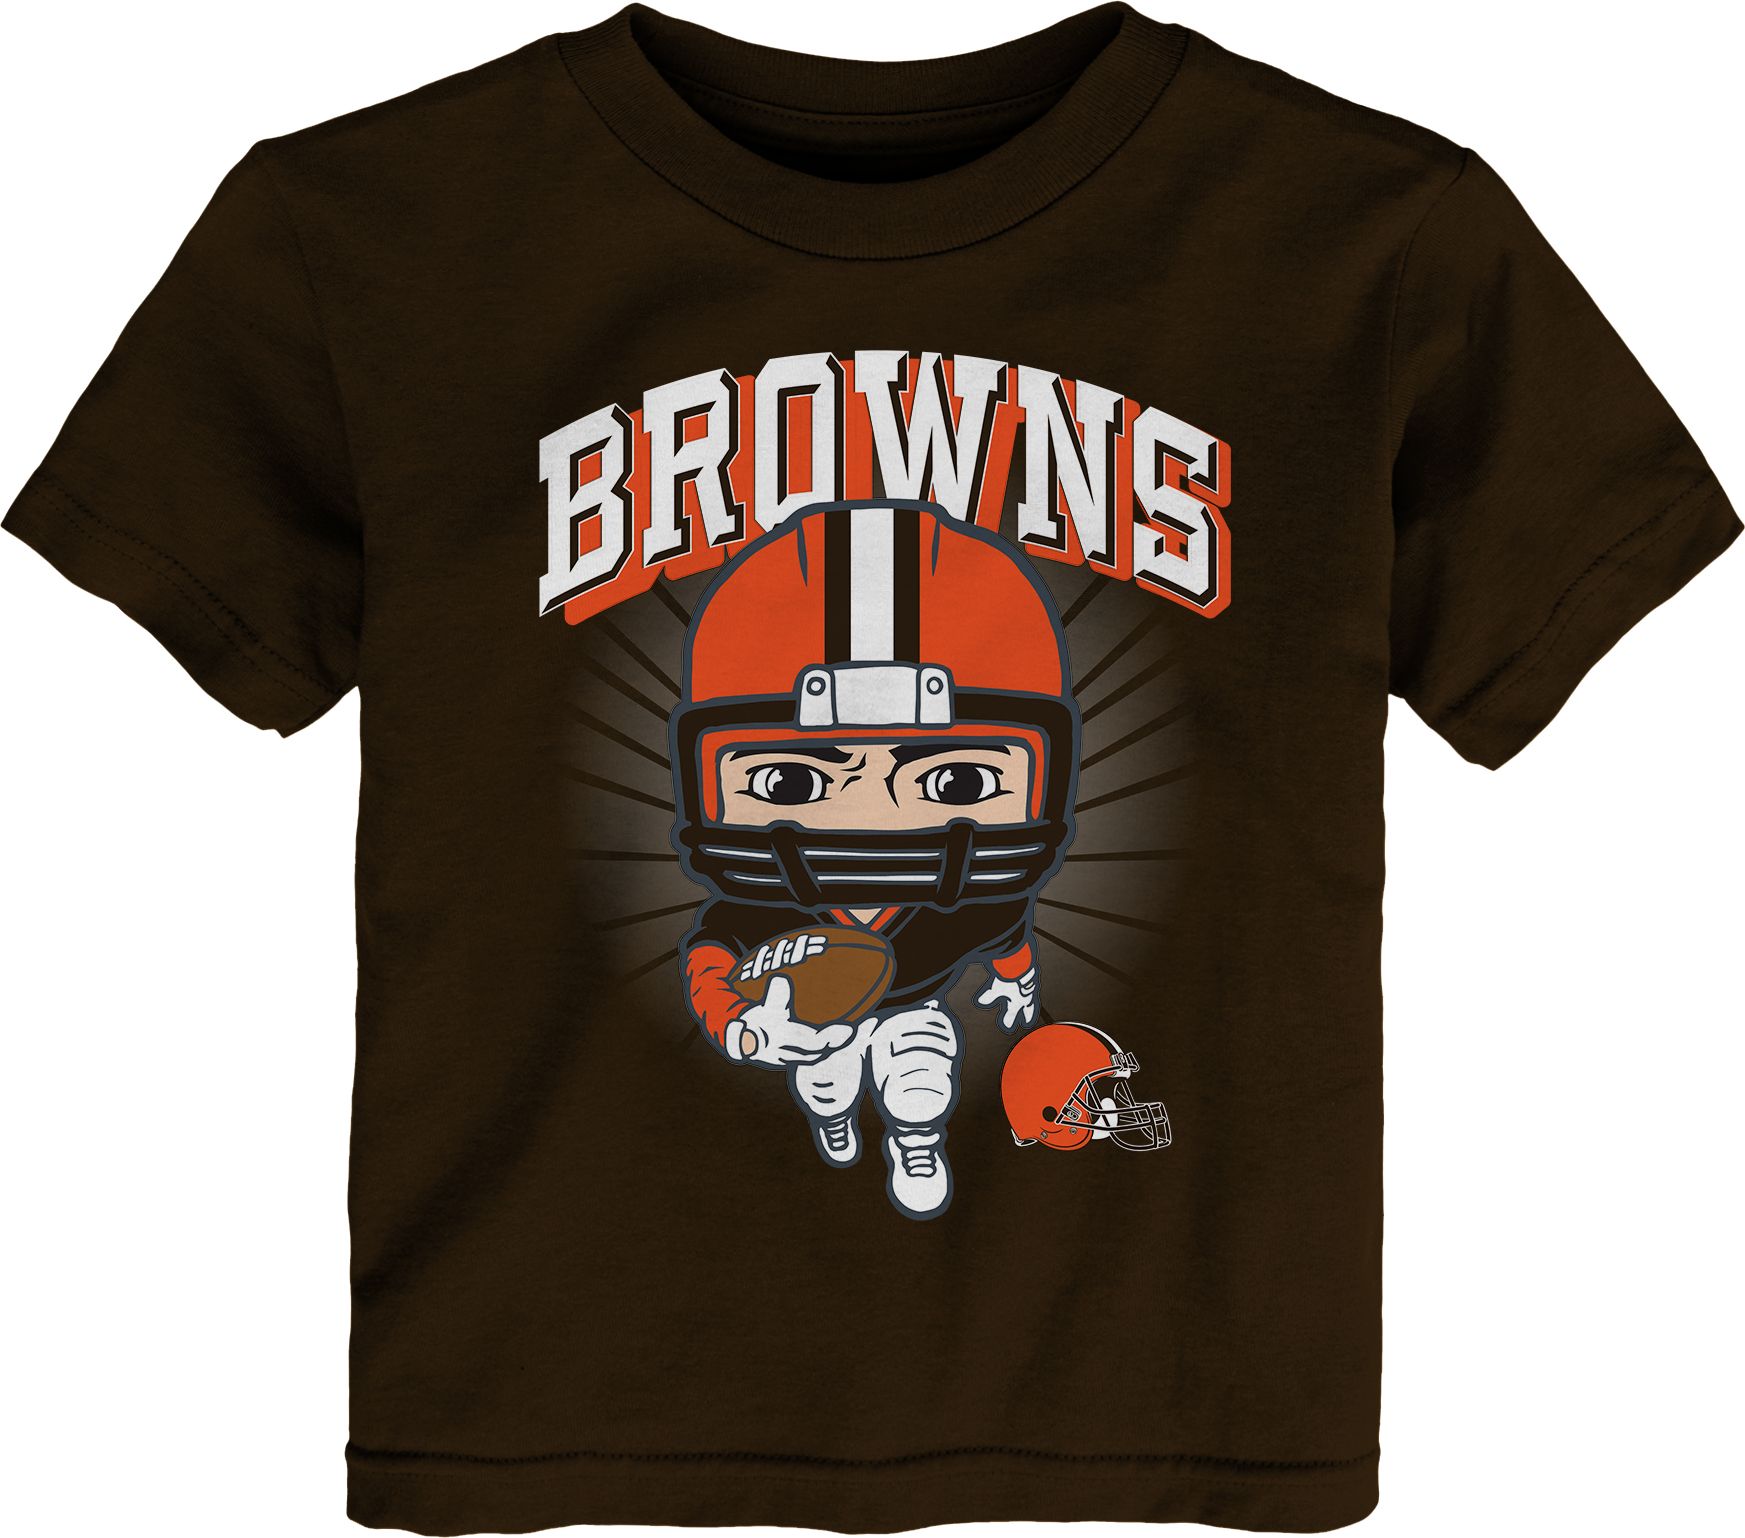 cleveland browns toddler apparel